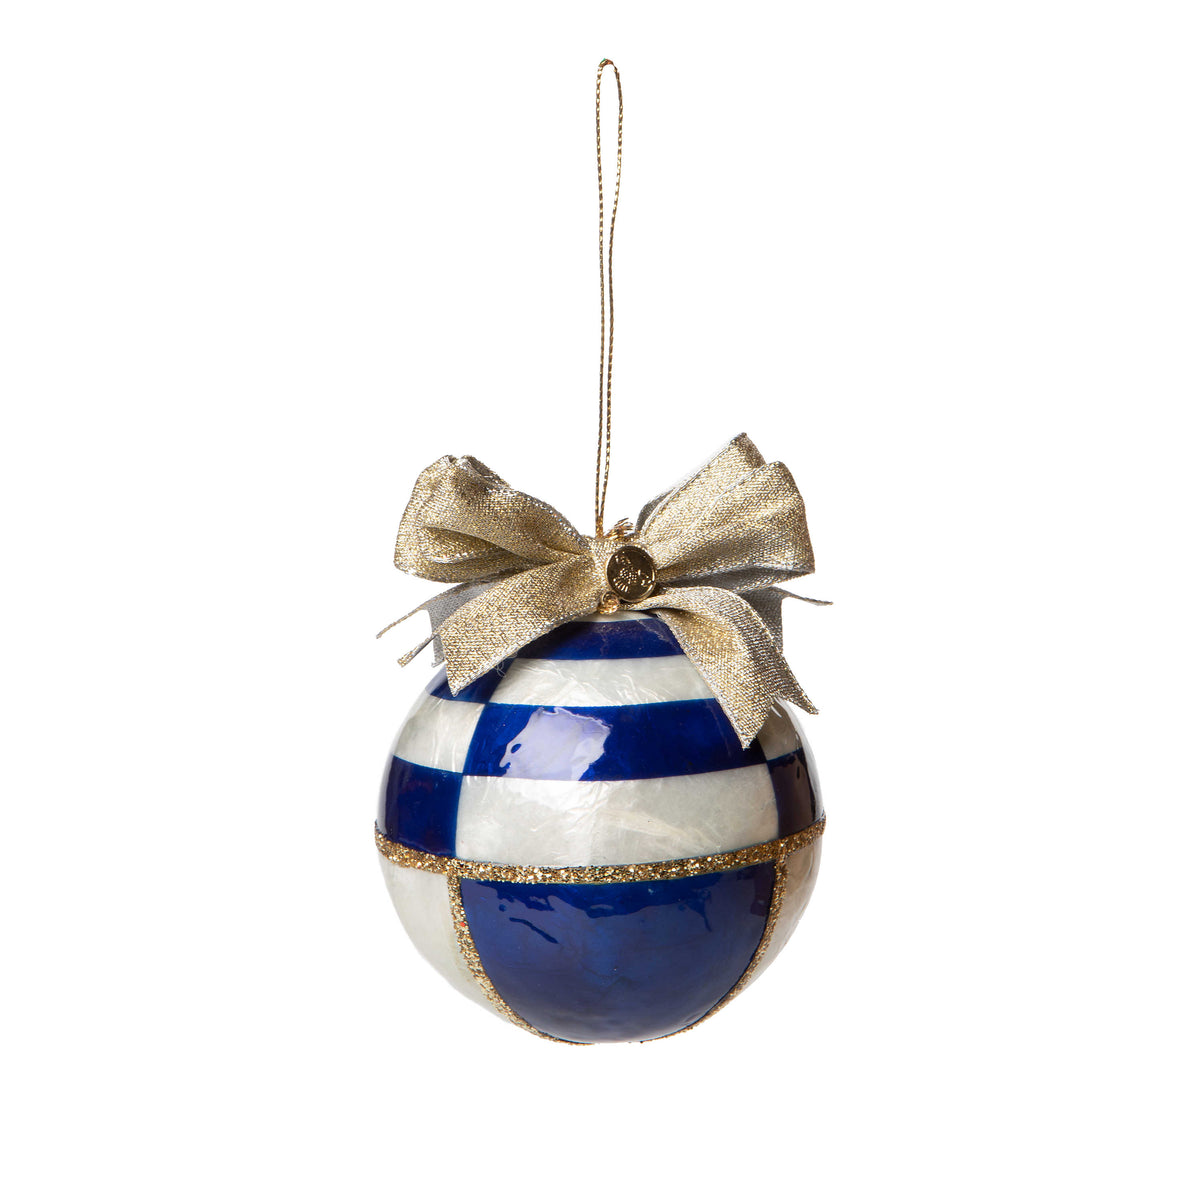 Royal Geo Capiz Ball Ornaments - Set of 4